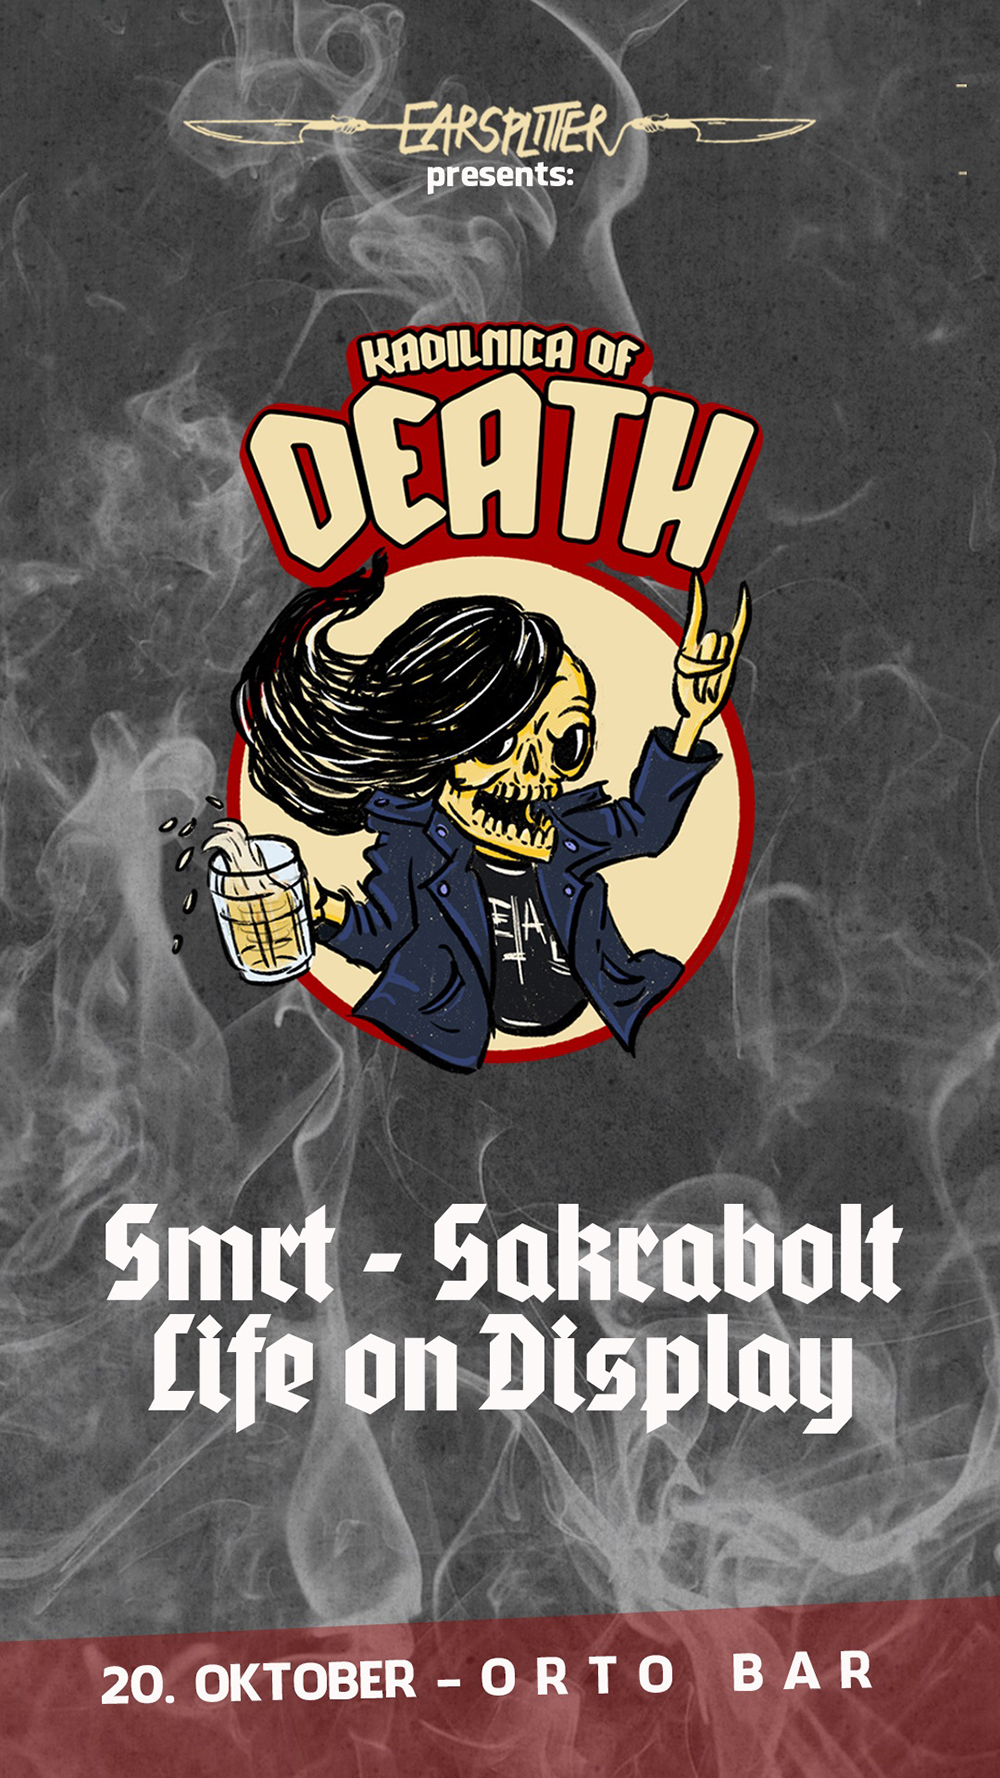 20.10.2022 - Kadilnica of Death: Smrt (Slo), Sakrabolt (Slo), Life on Display (Slo) @ Orto Bar, Ljubljana